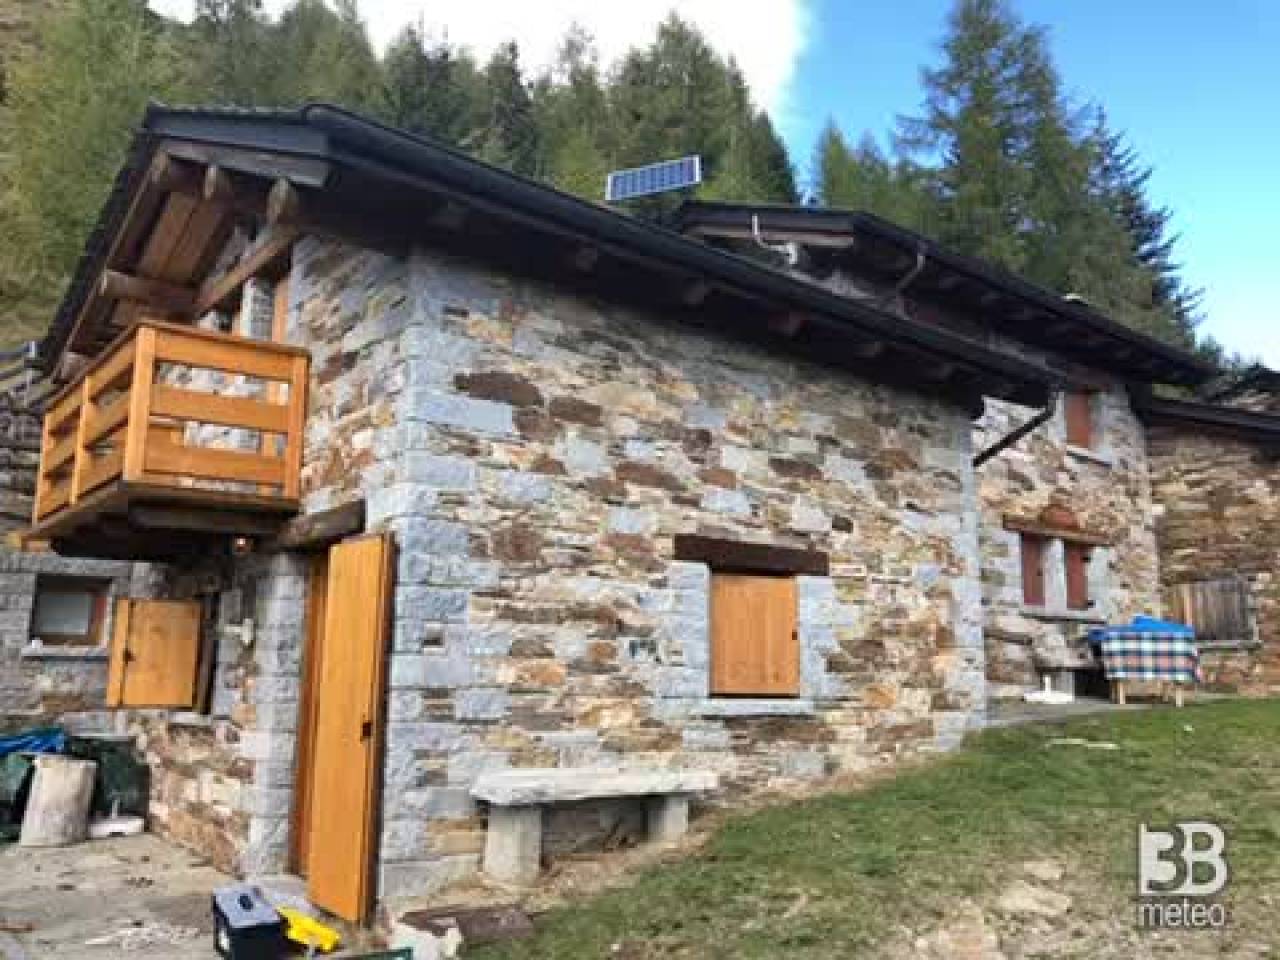 Cronaca meteo, la prima NEVE in Val Grosina. Video